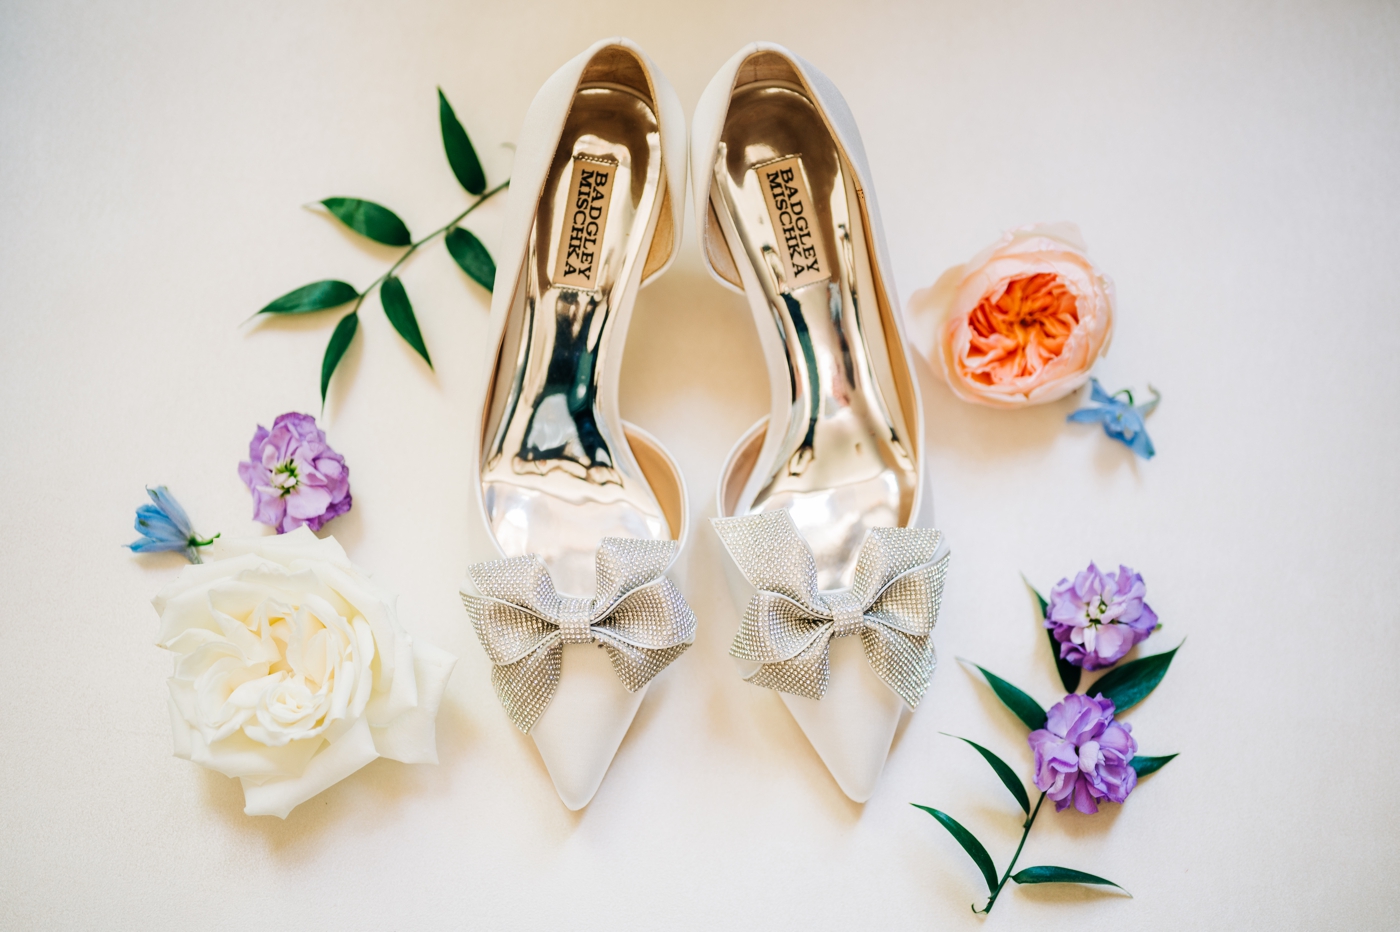 ClassicIvory Badgley Mischka wedding heels with bow detail